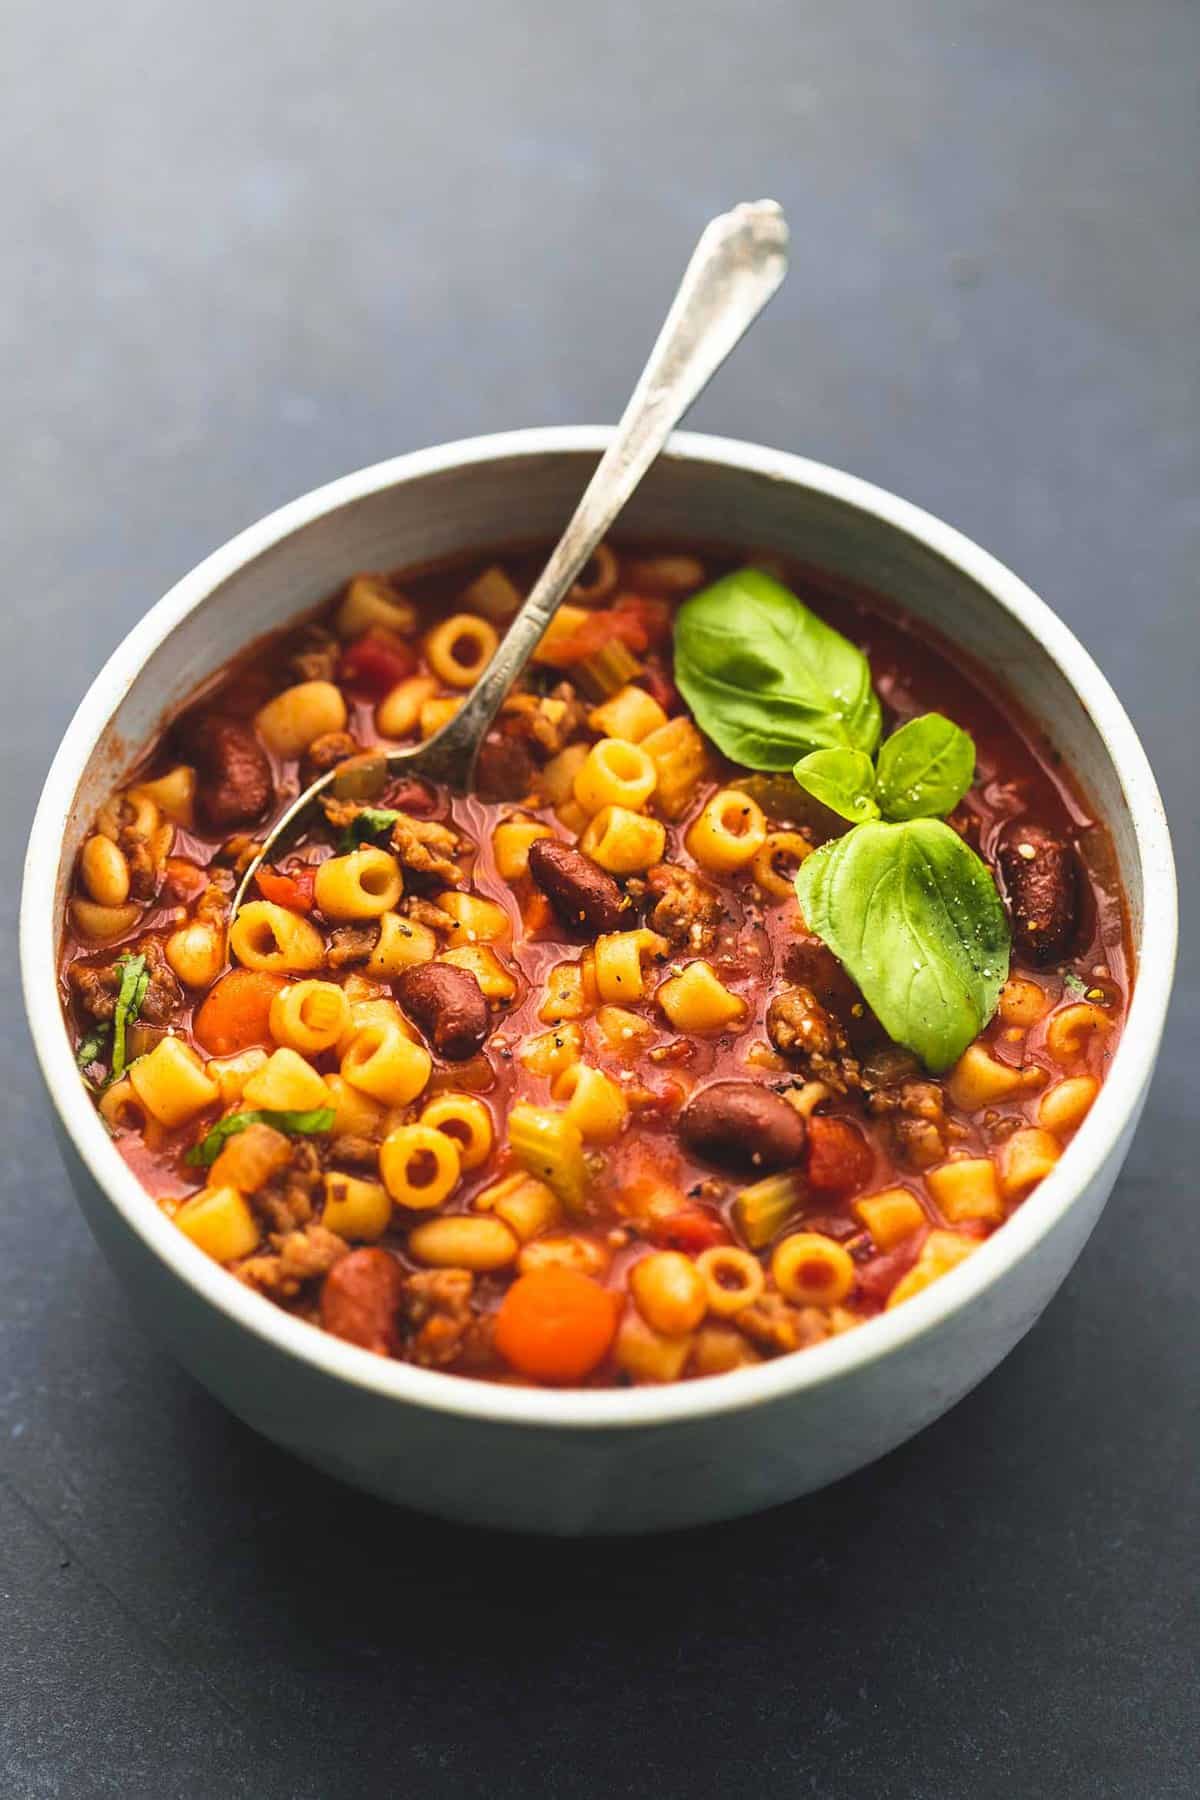 pasta e fagioli soup with a spoon in a bowl.